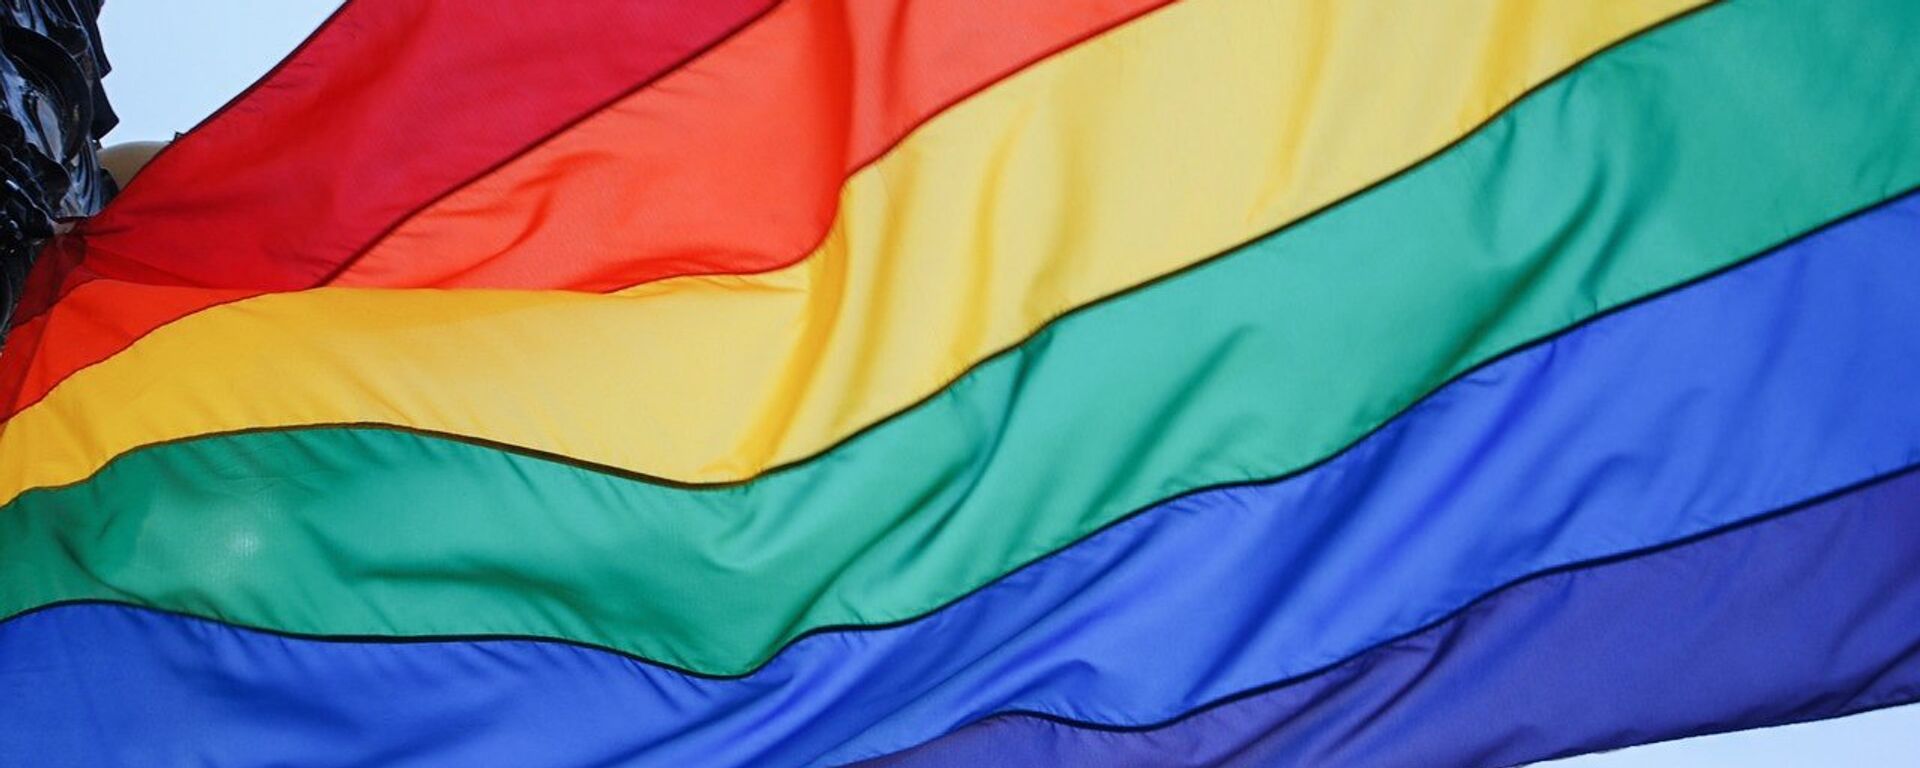 Bandera arcoíris, símbolo del movimiento LGBT - Sputnik Mundo, 1920, 27.06.2022